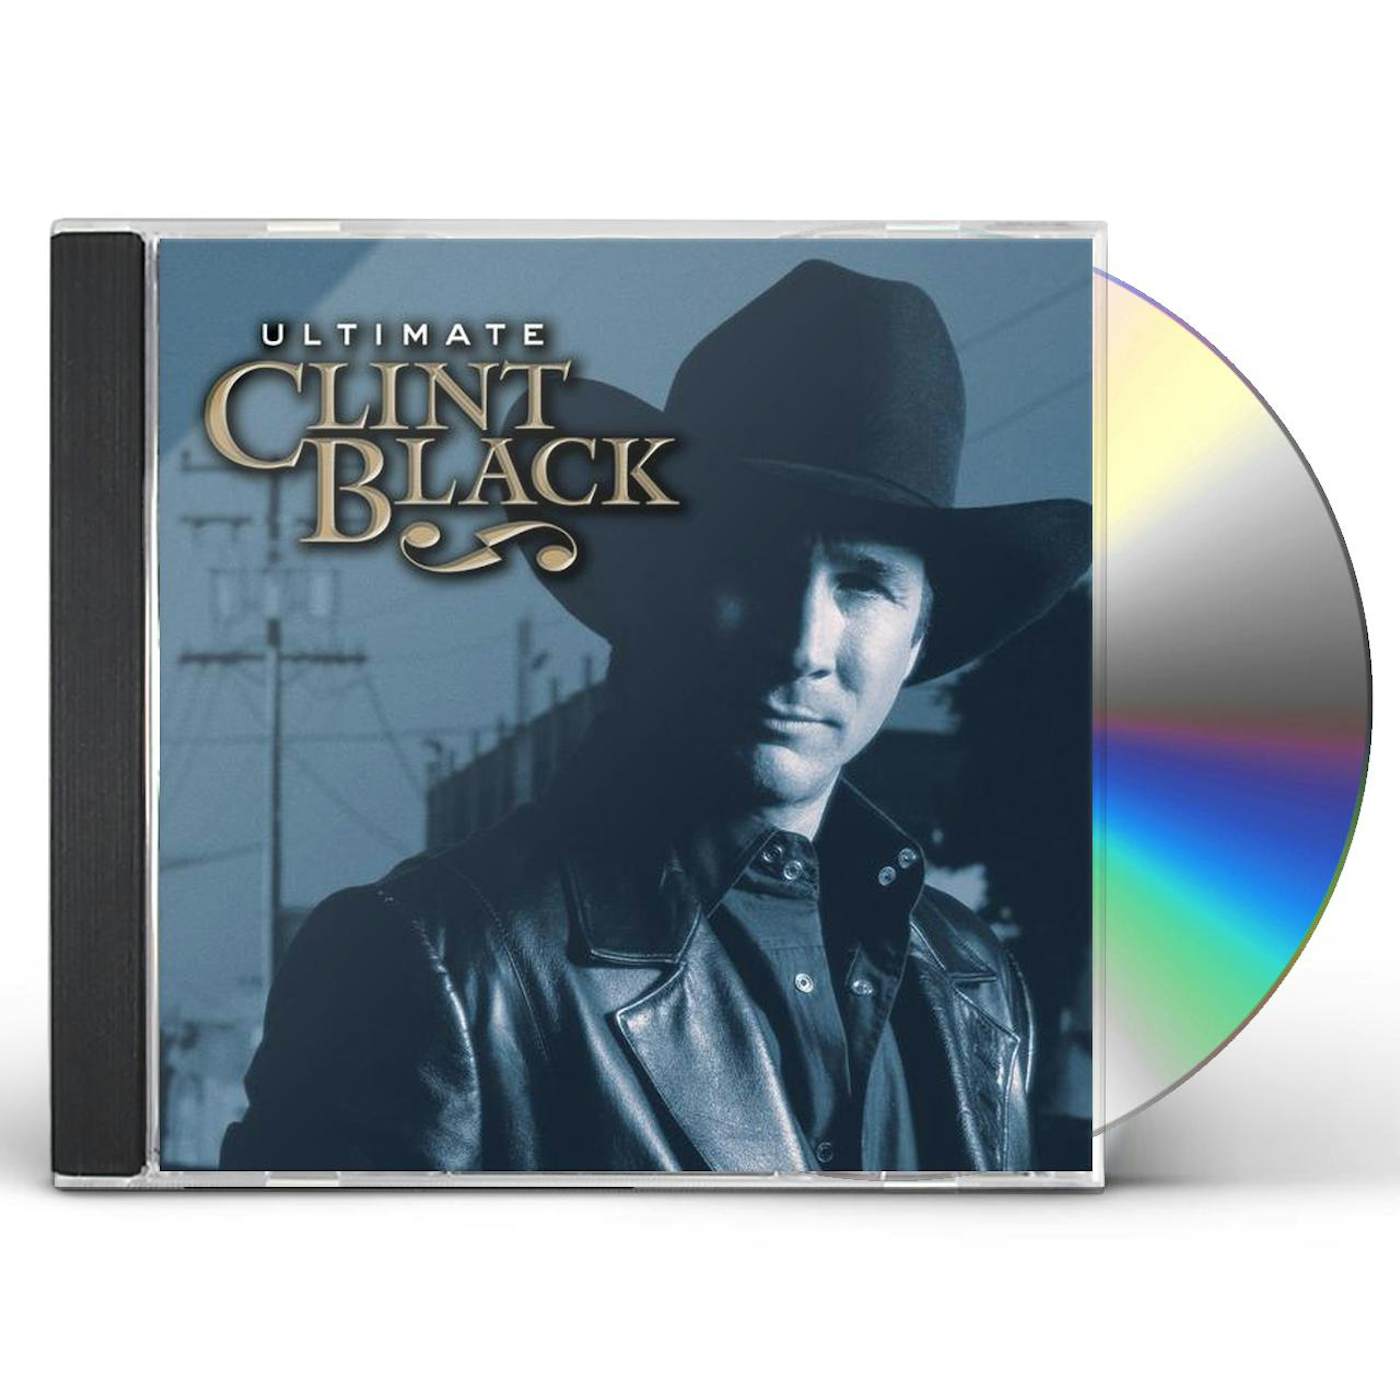 ULTIMATE CLINT BLACK CD